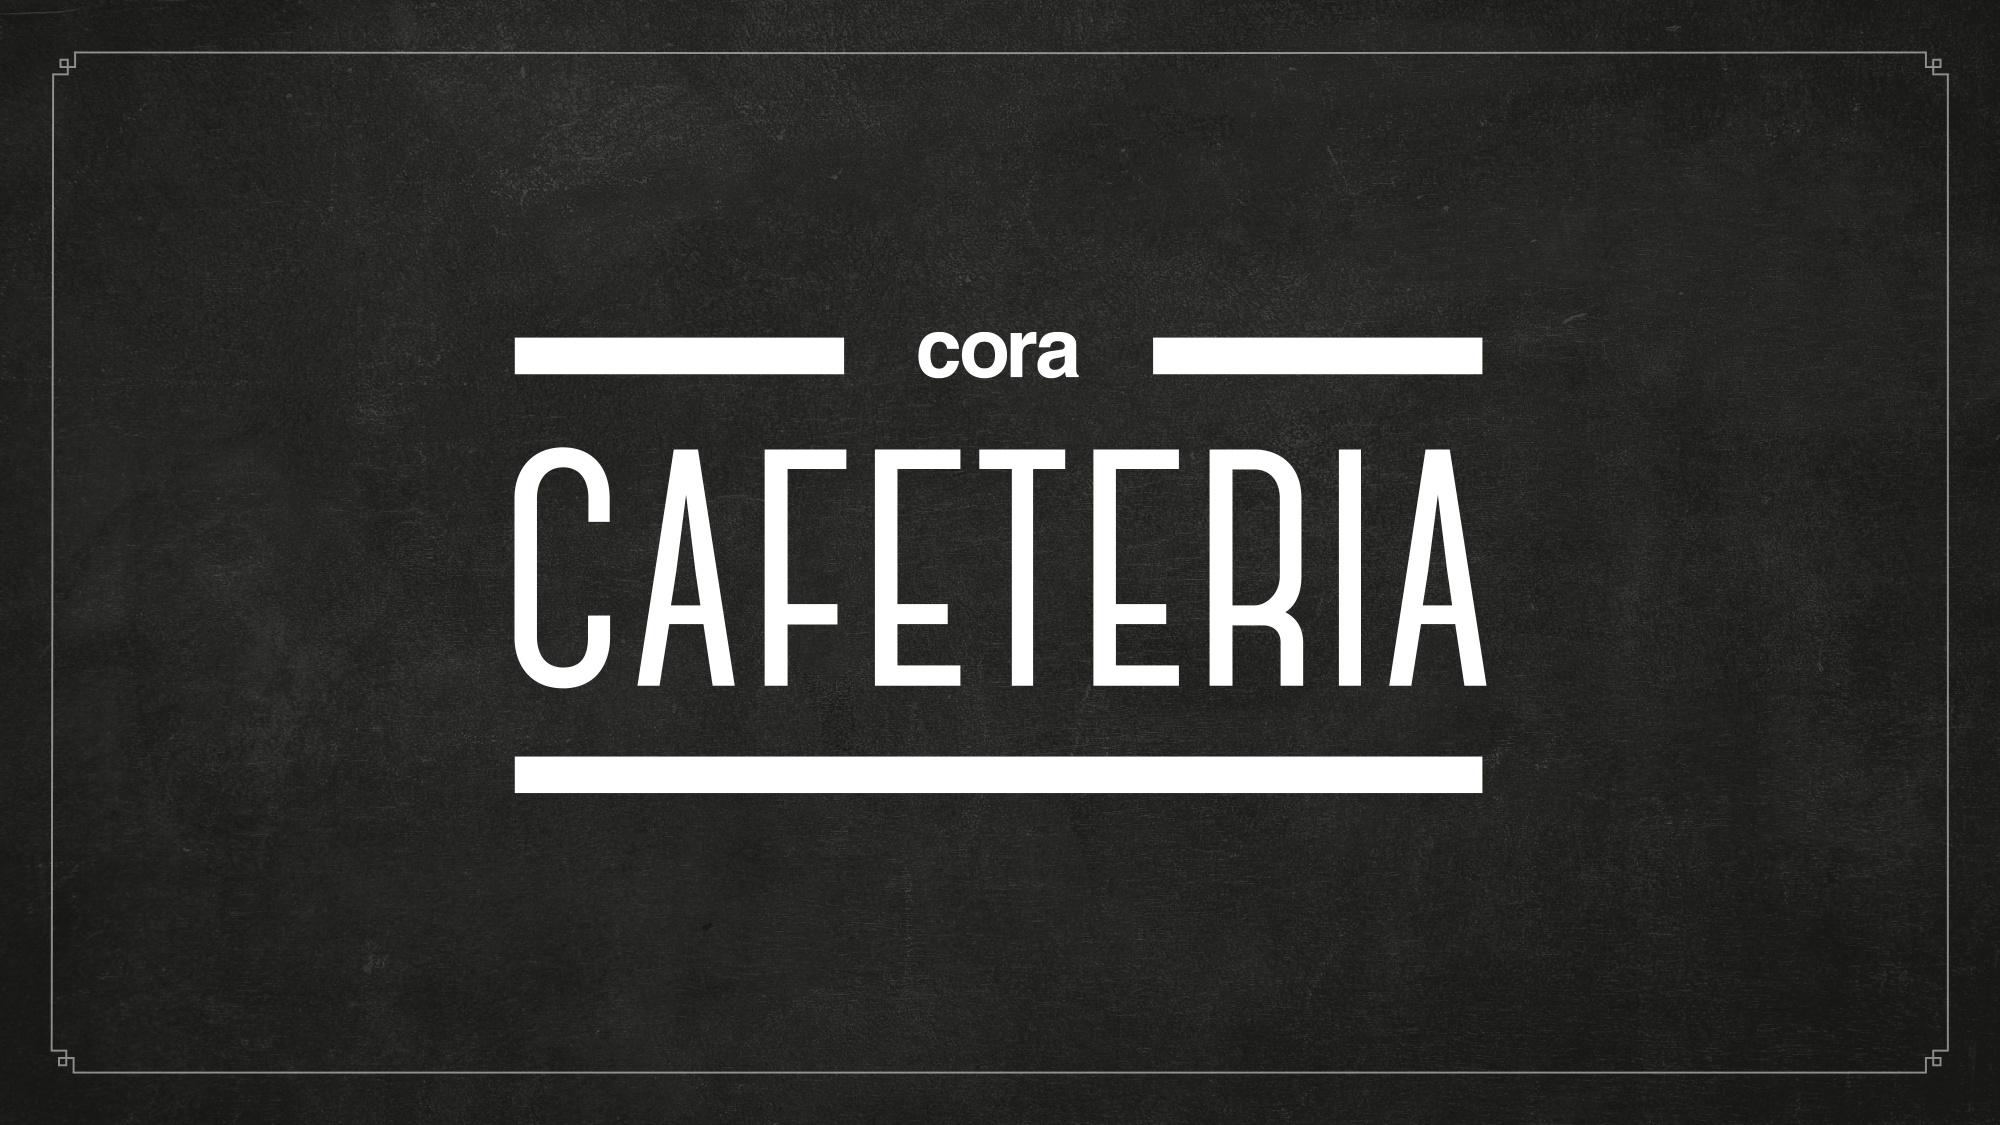 Cora Cafeteria Dorlisheim